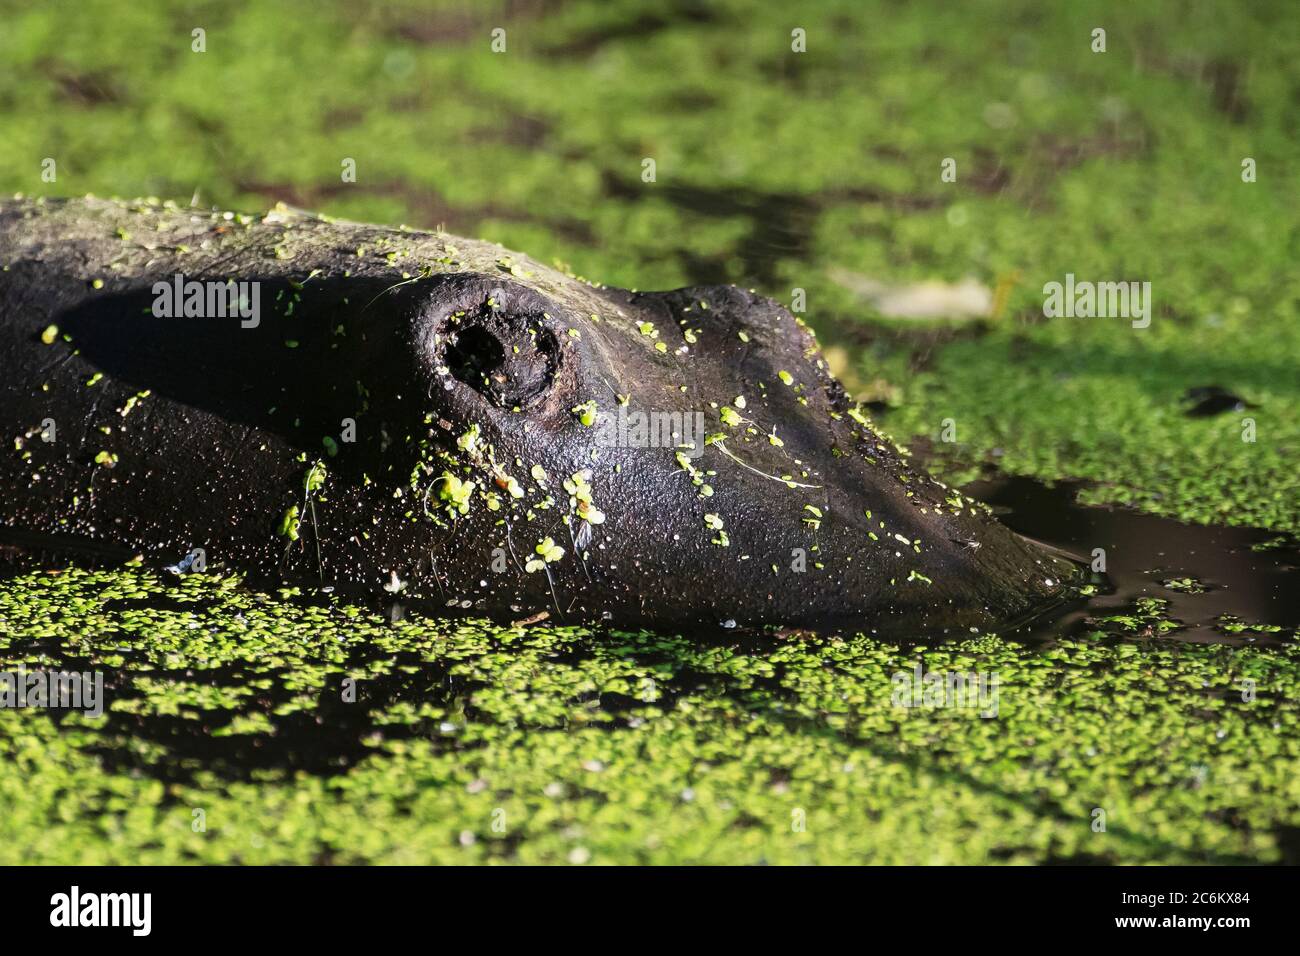 Alligator-log look alike floating on duck-weed covered pond Stock Photo